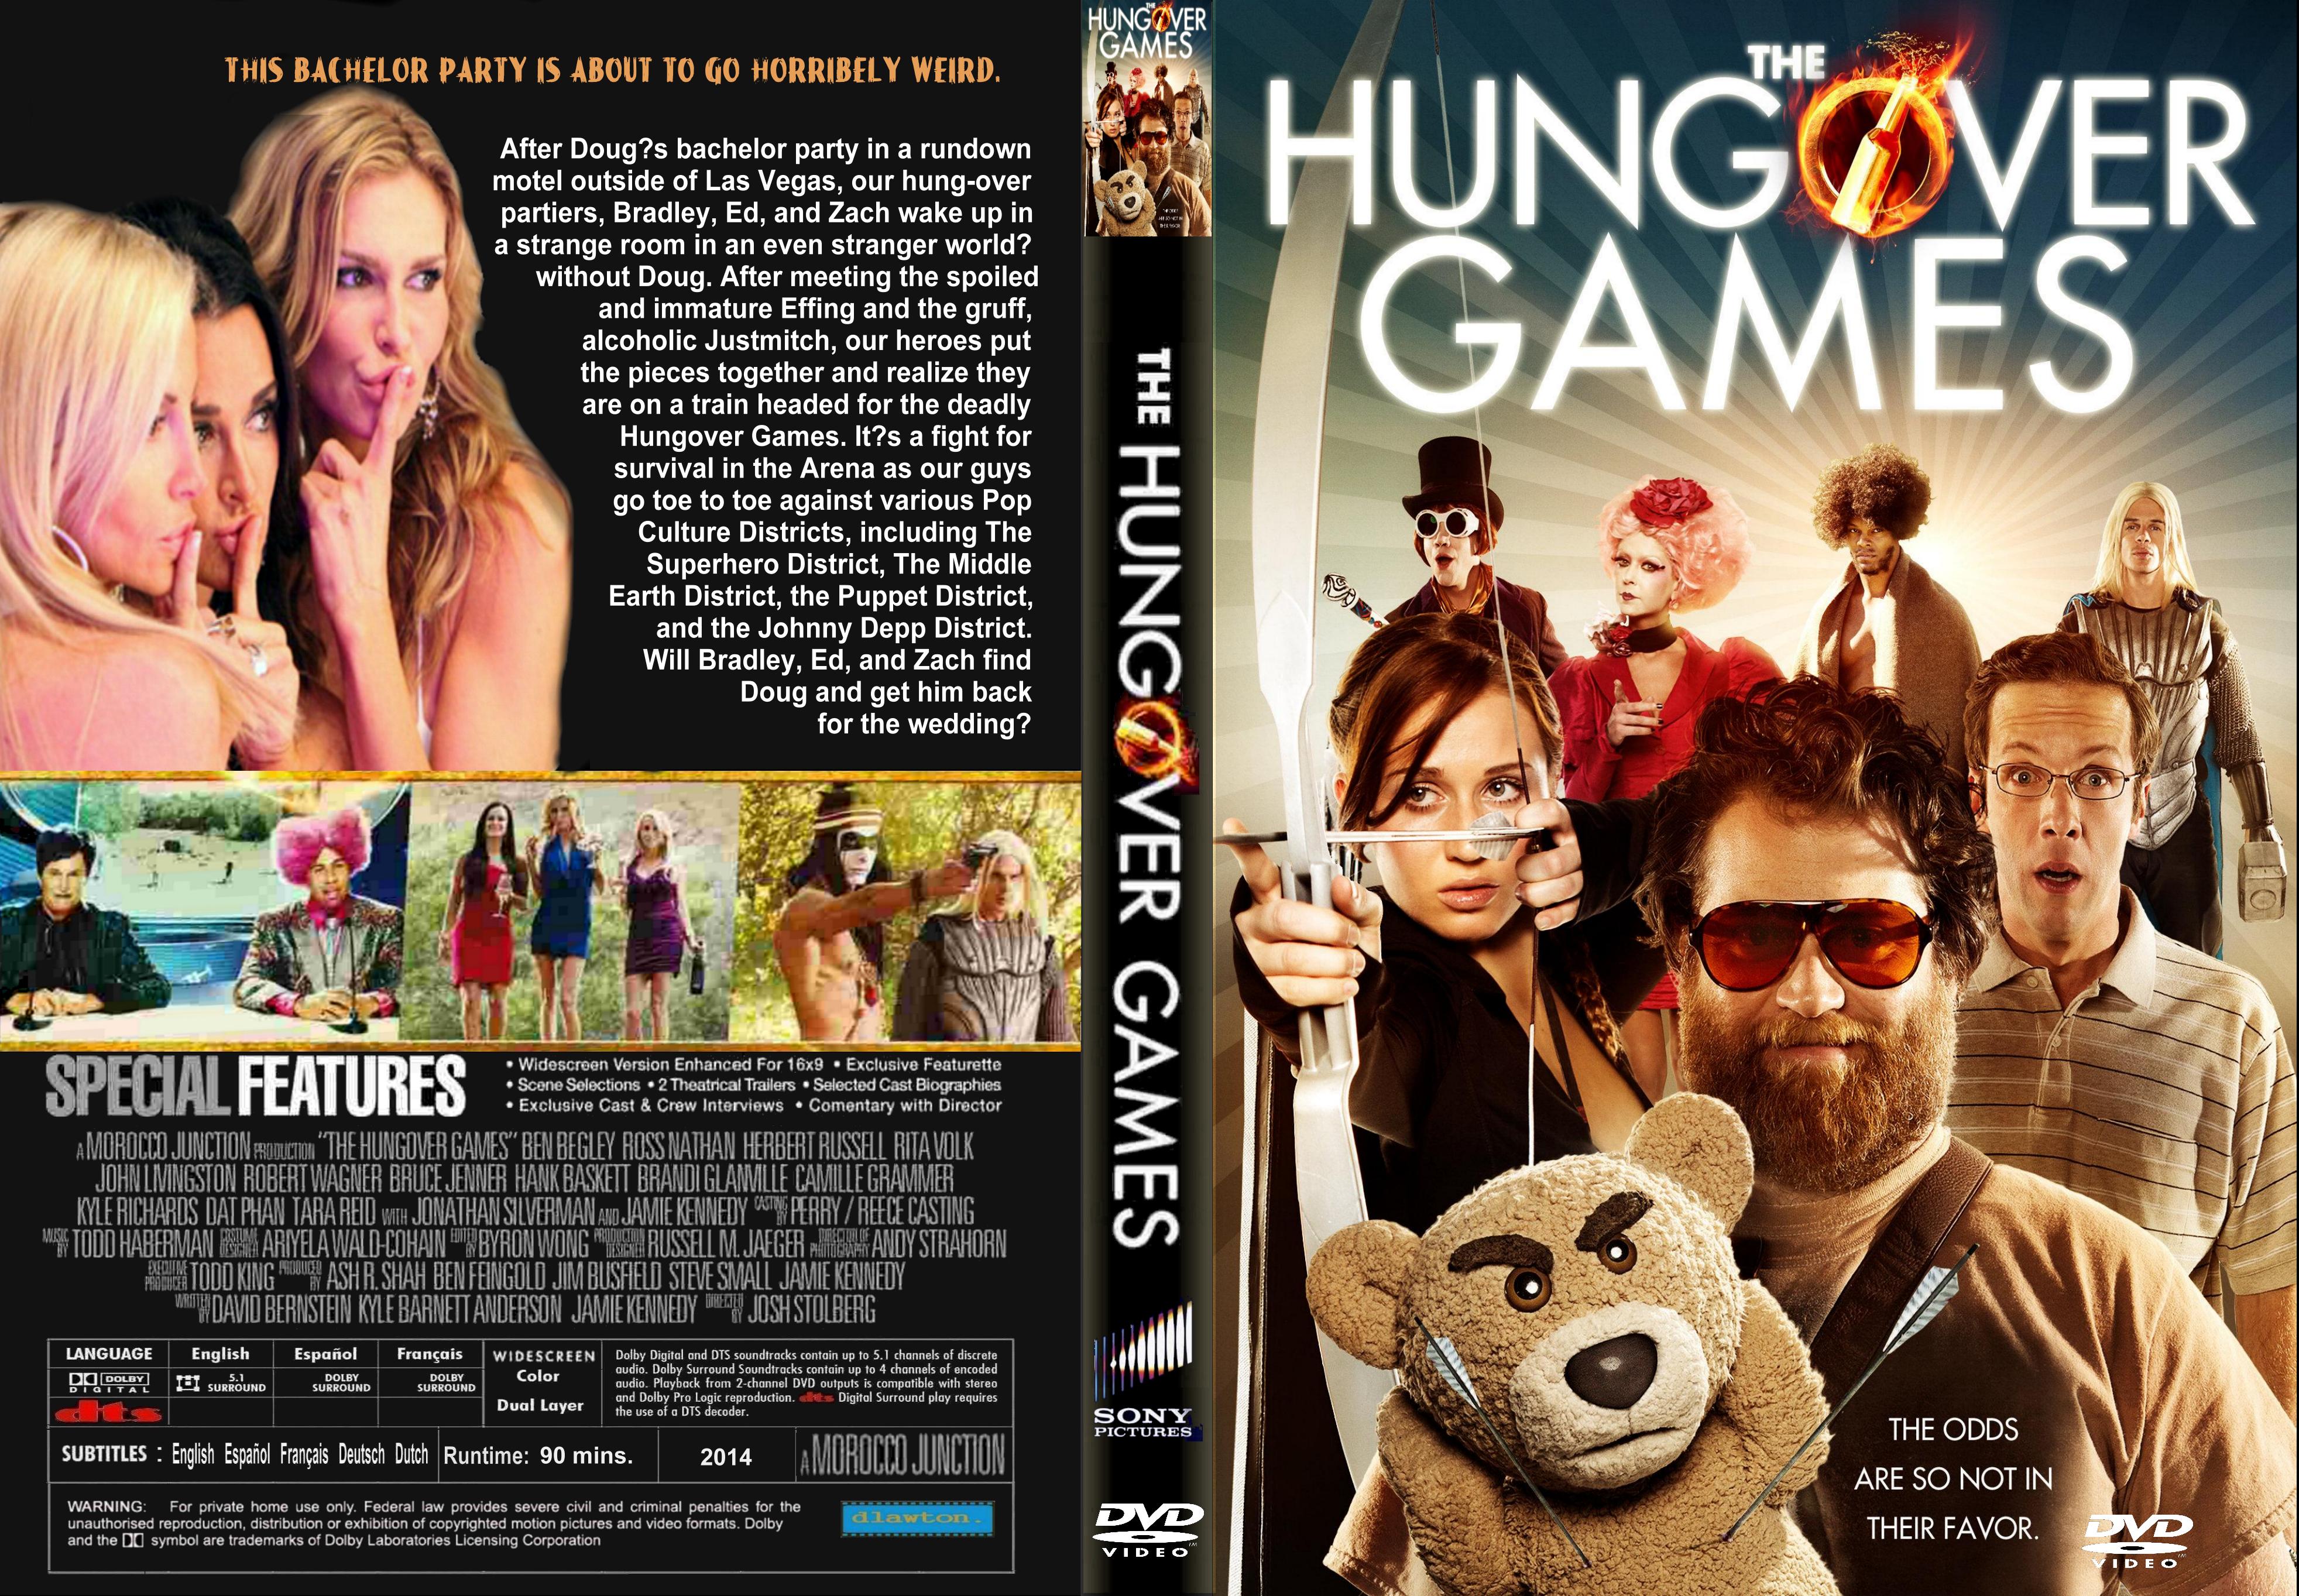 The Hungover Games 2014 R1 CUSTOM.jpg.